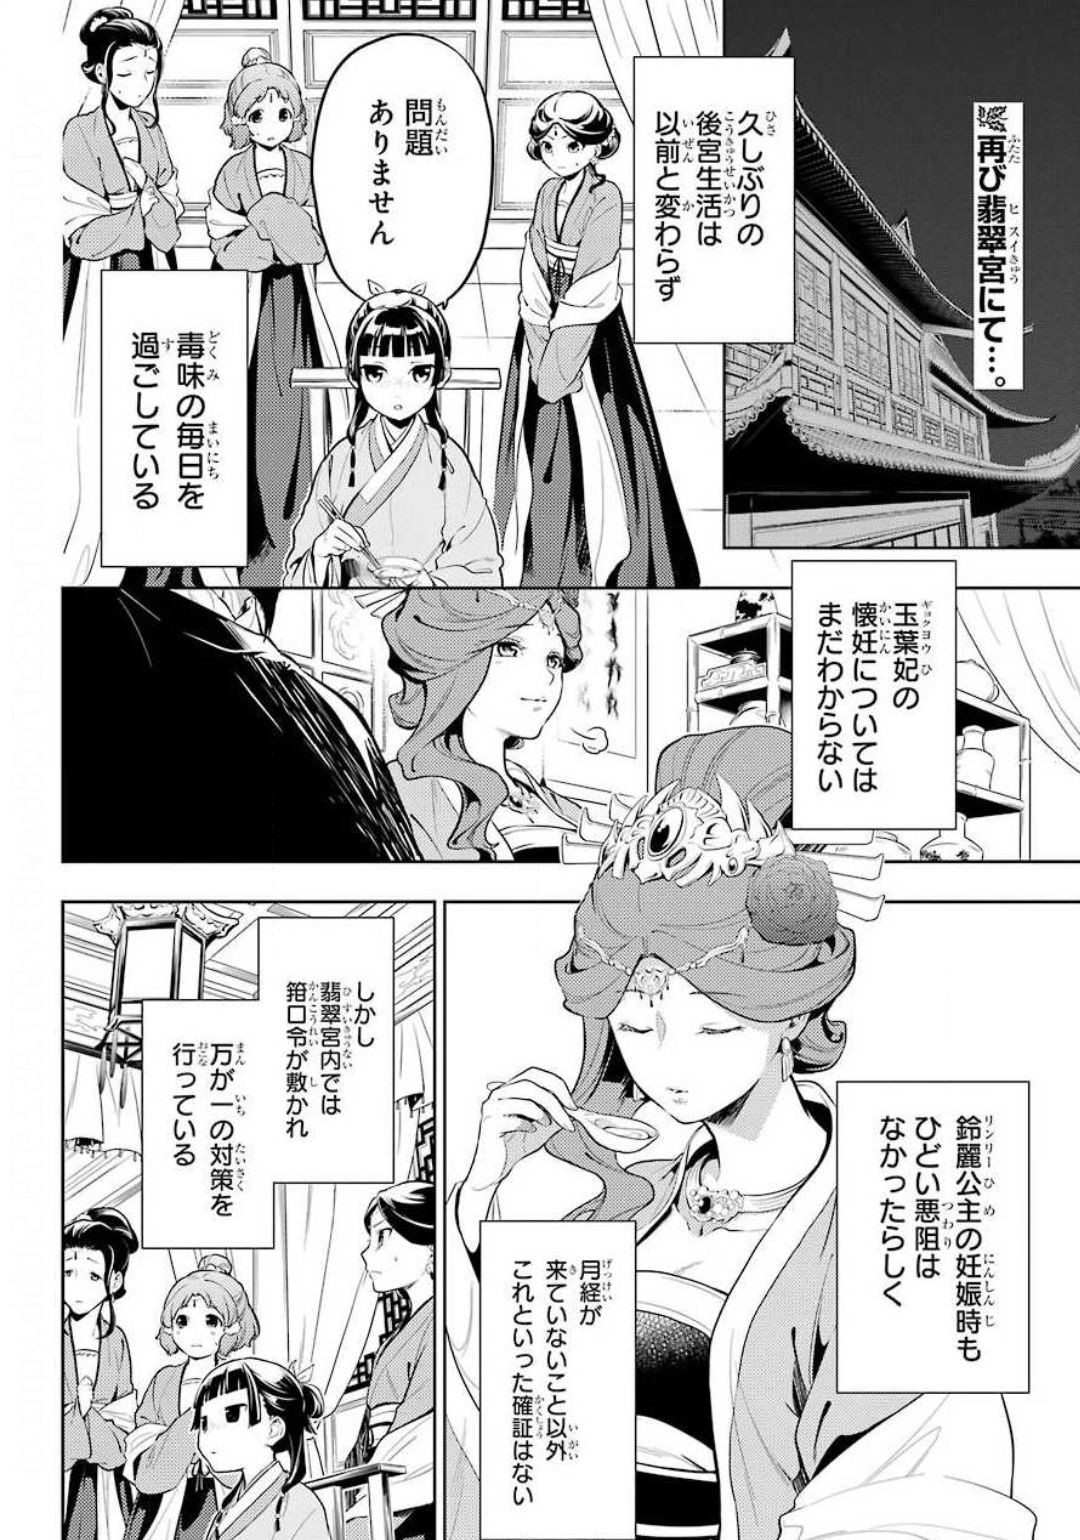 Kusuriya no Hitorigoto - Chapter 35-1 - Page 3